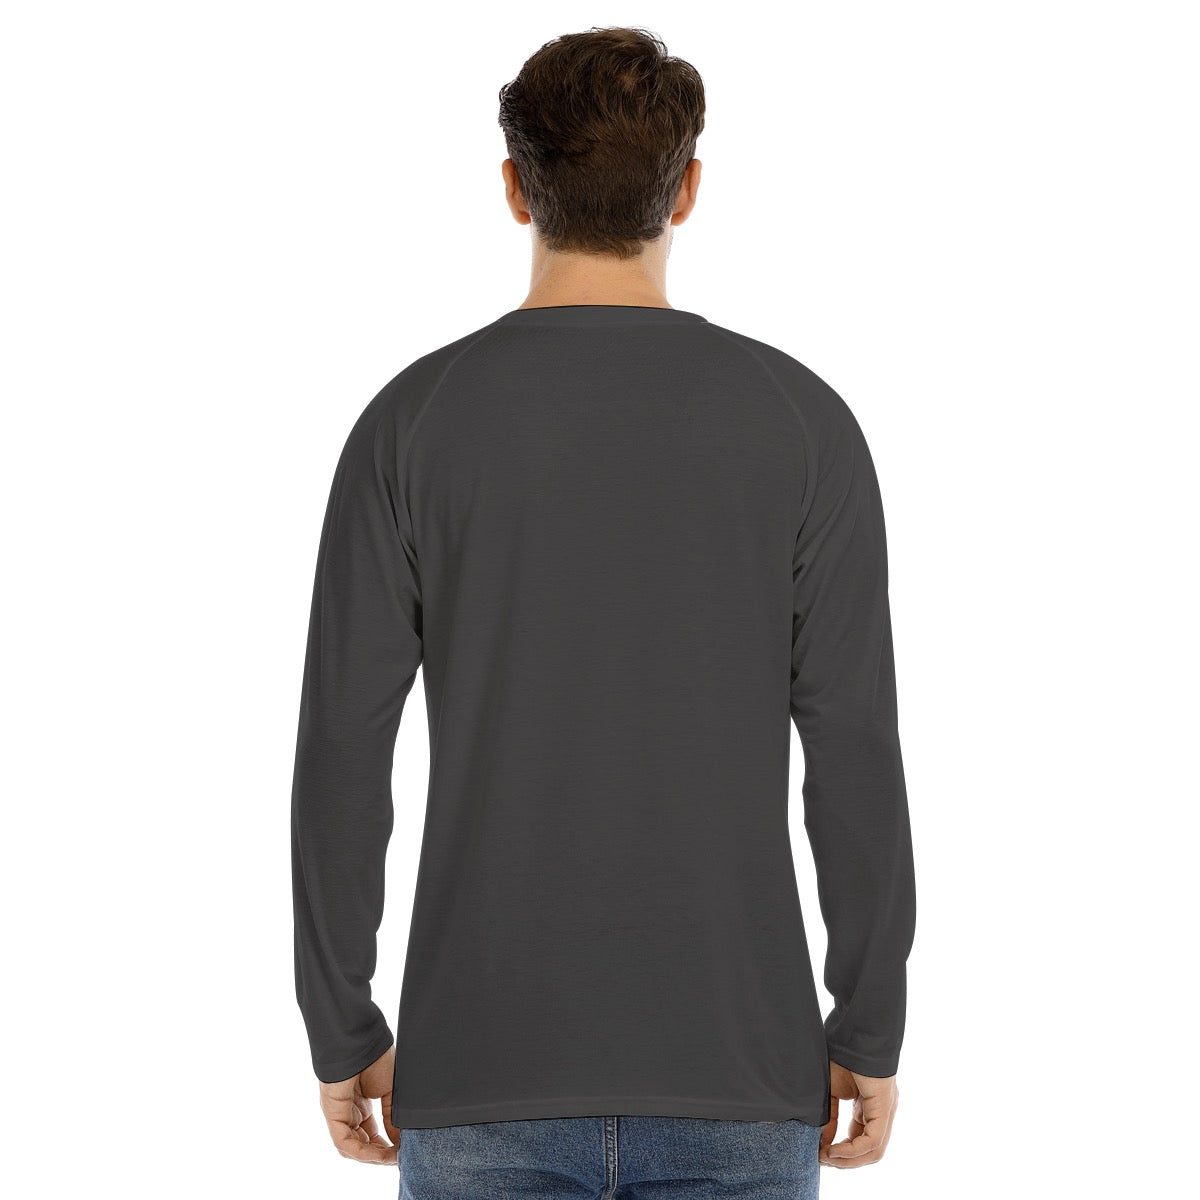 Pattern 110 -- Men's Long Sleeve T-shirt With Raglan Sleeve